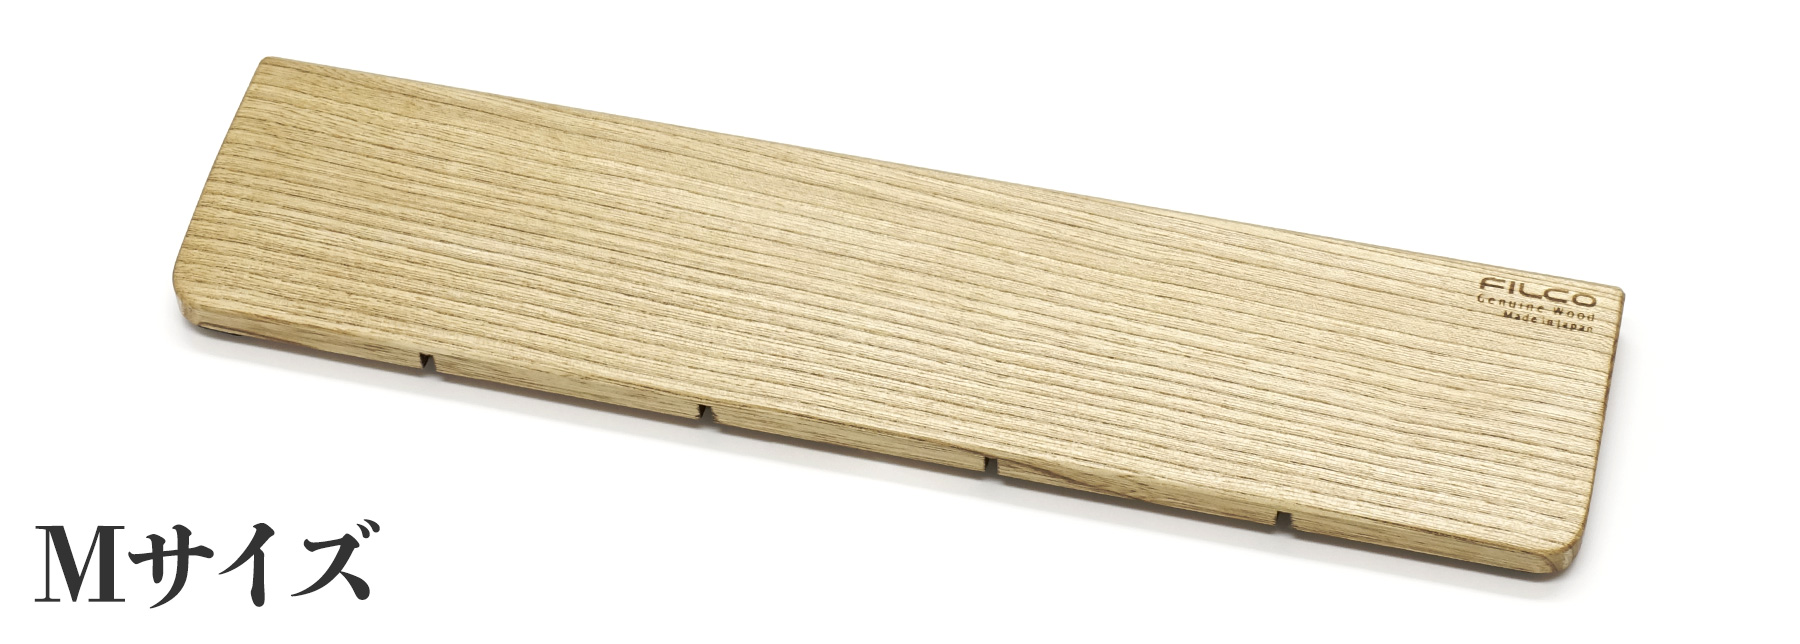 【北海道産天然木】FILCO Genuine Wood Wrist Rest M size